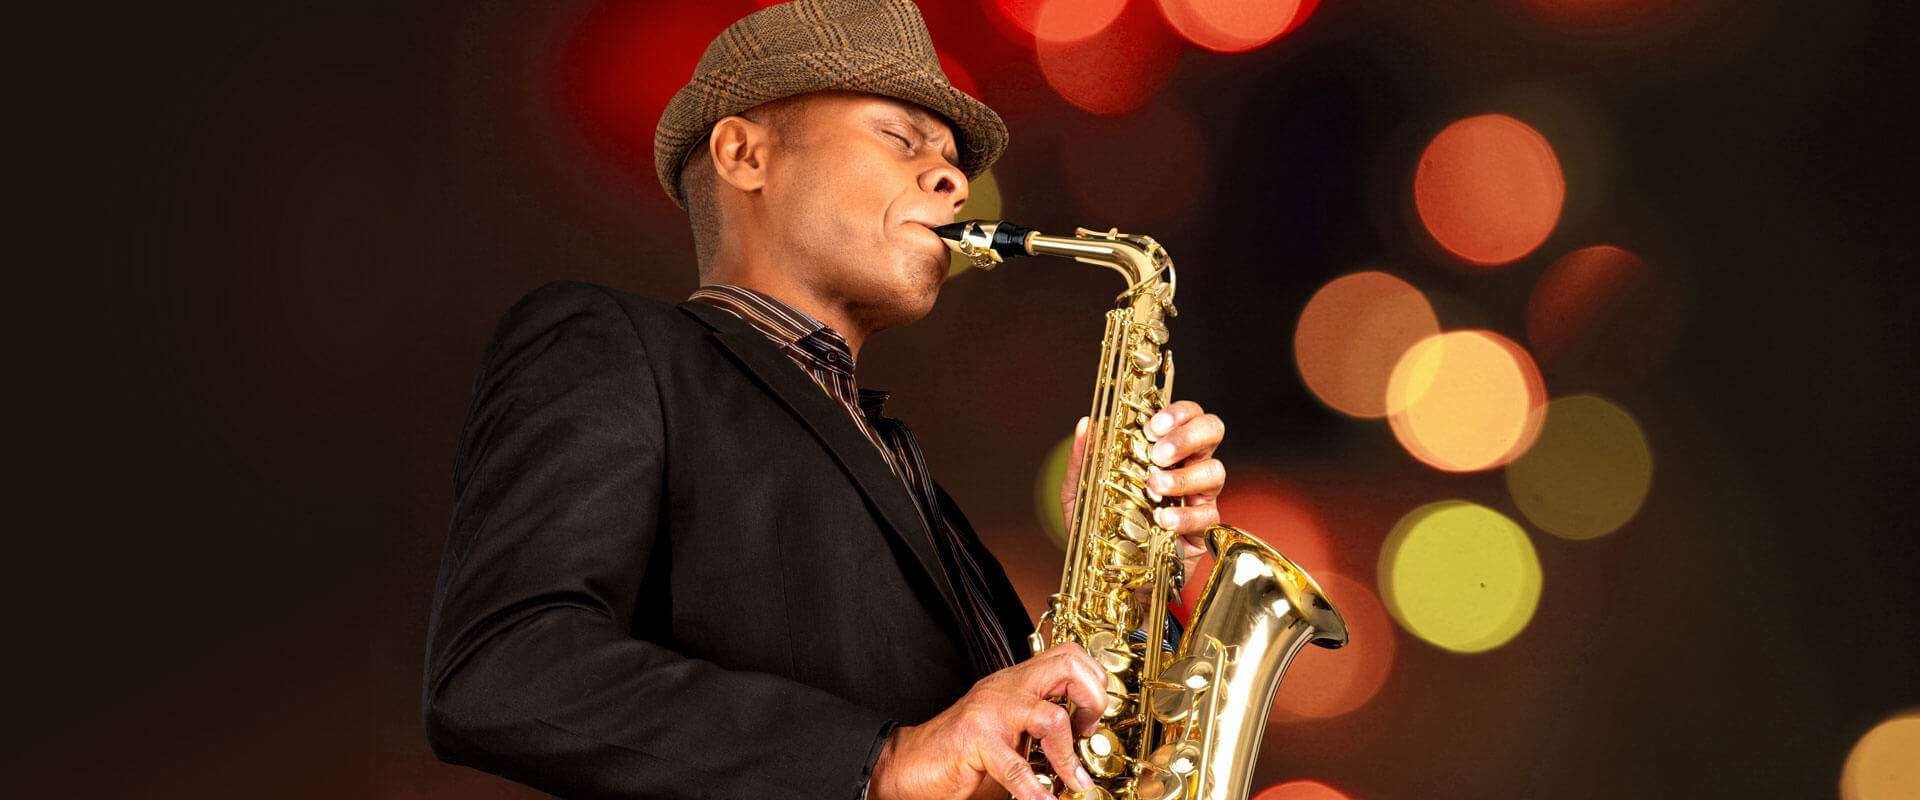 Saxophone Lessons Miami, FL